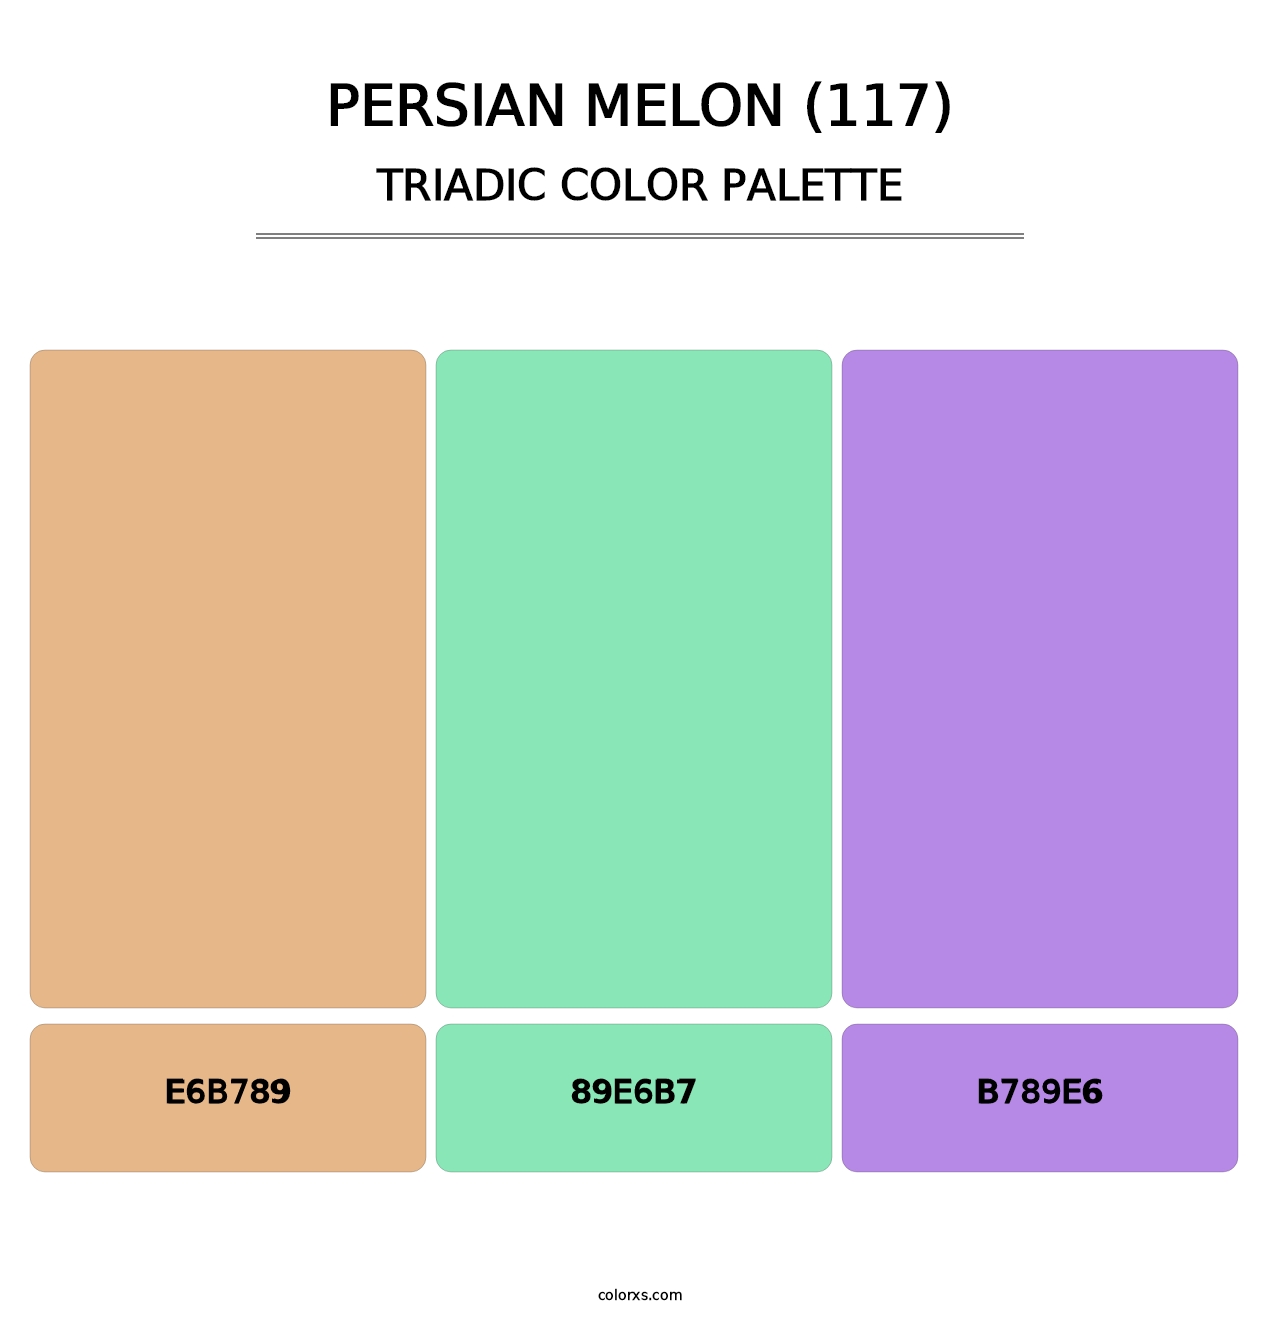 Persian Melon (117) - Triadic Color Palette